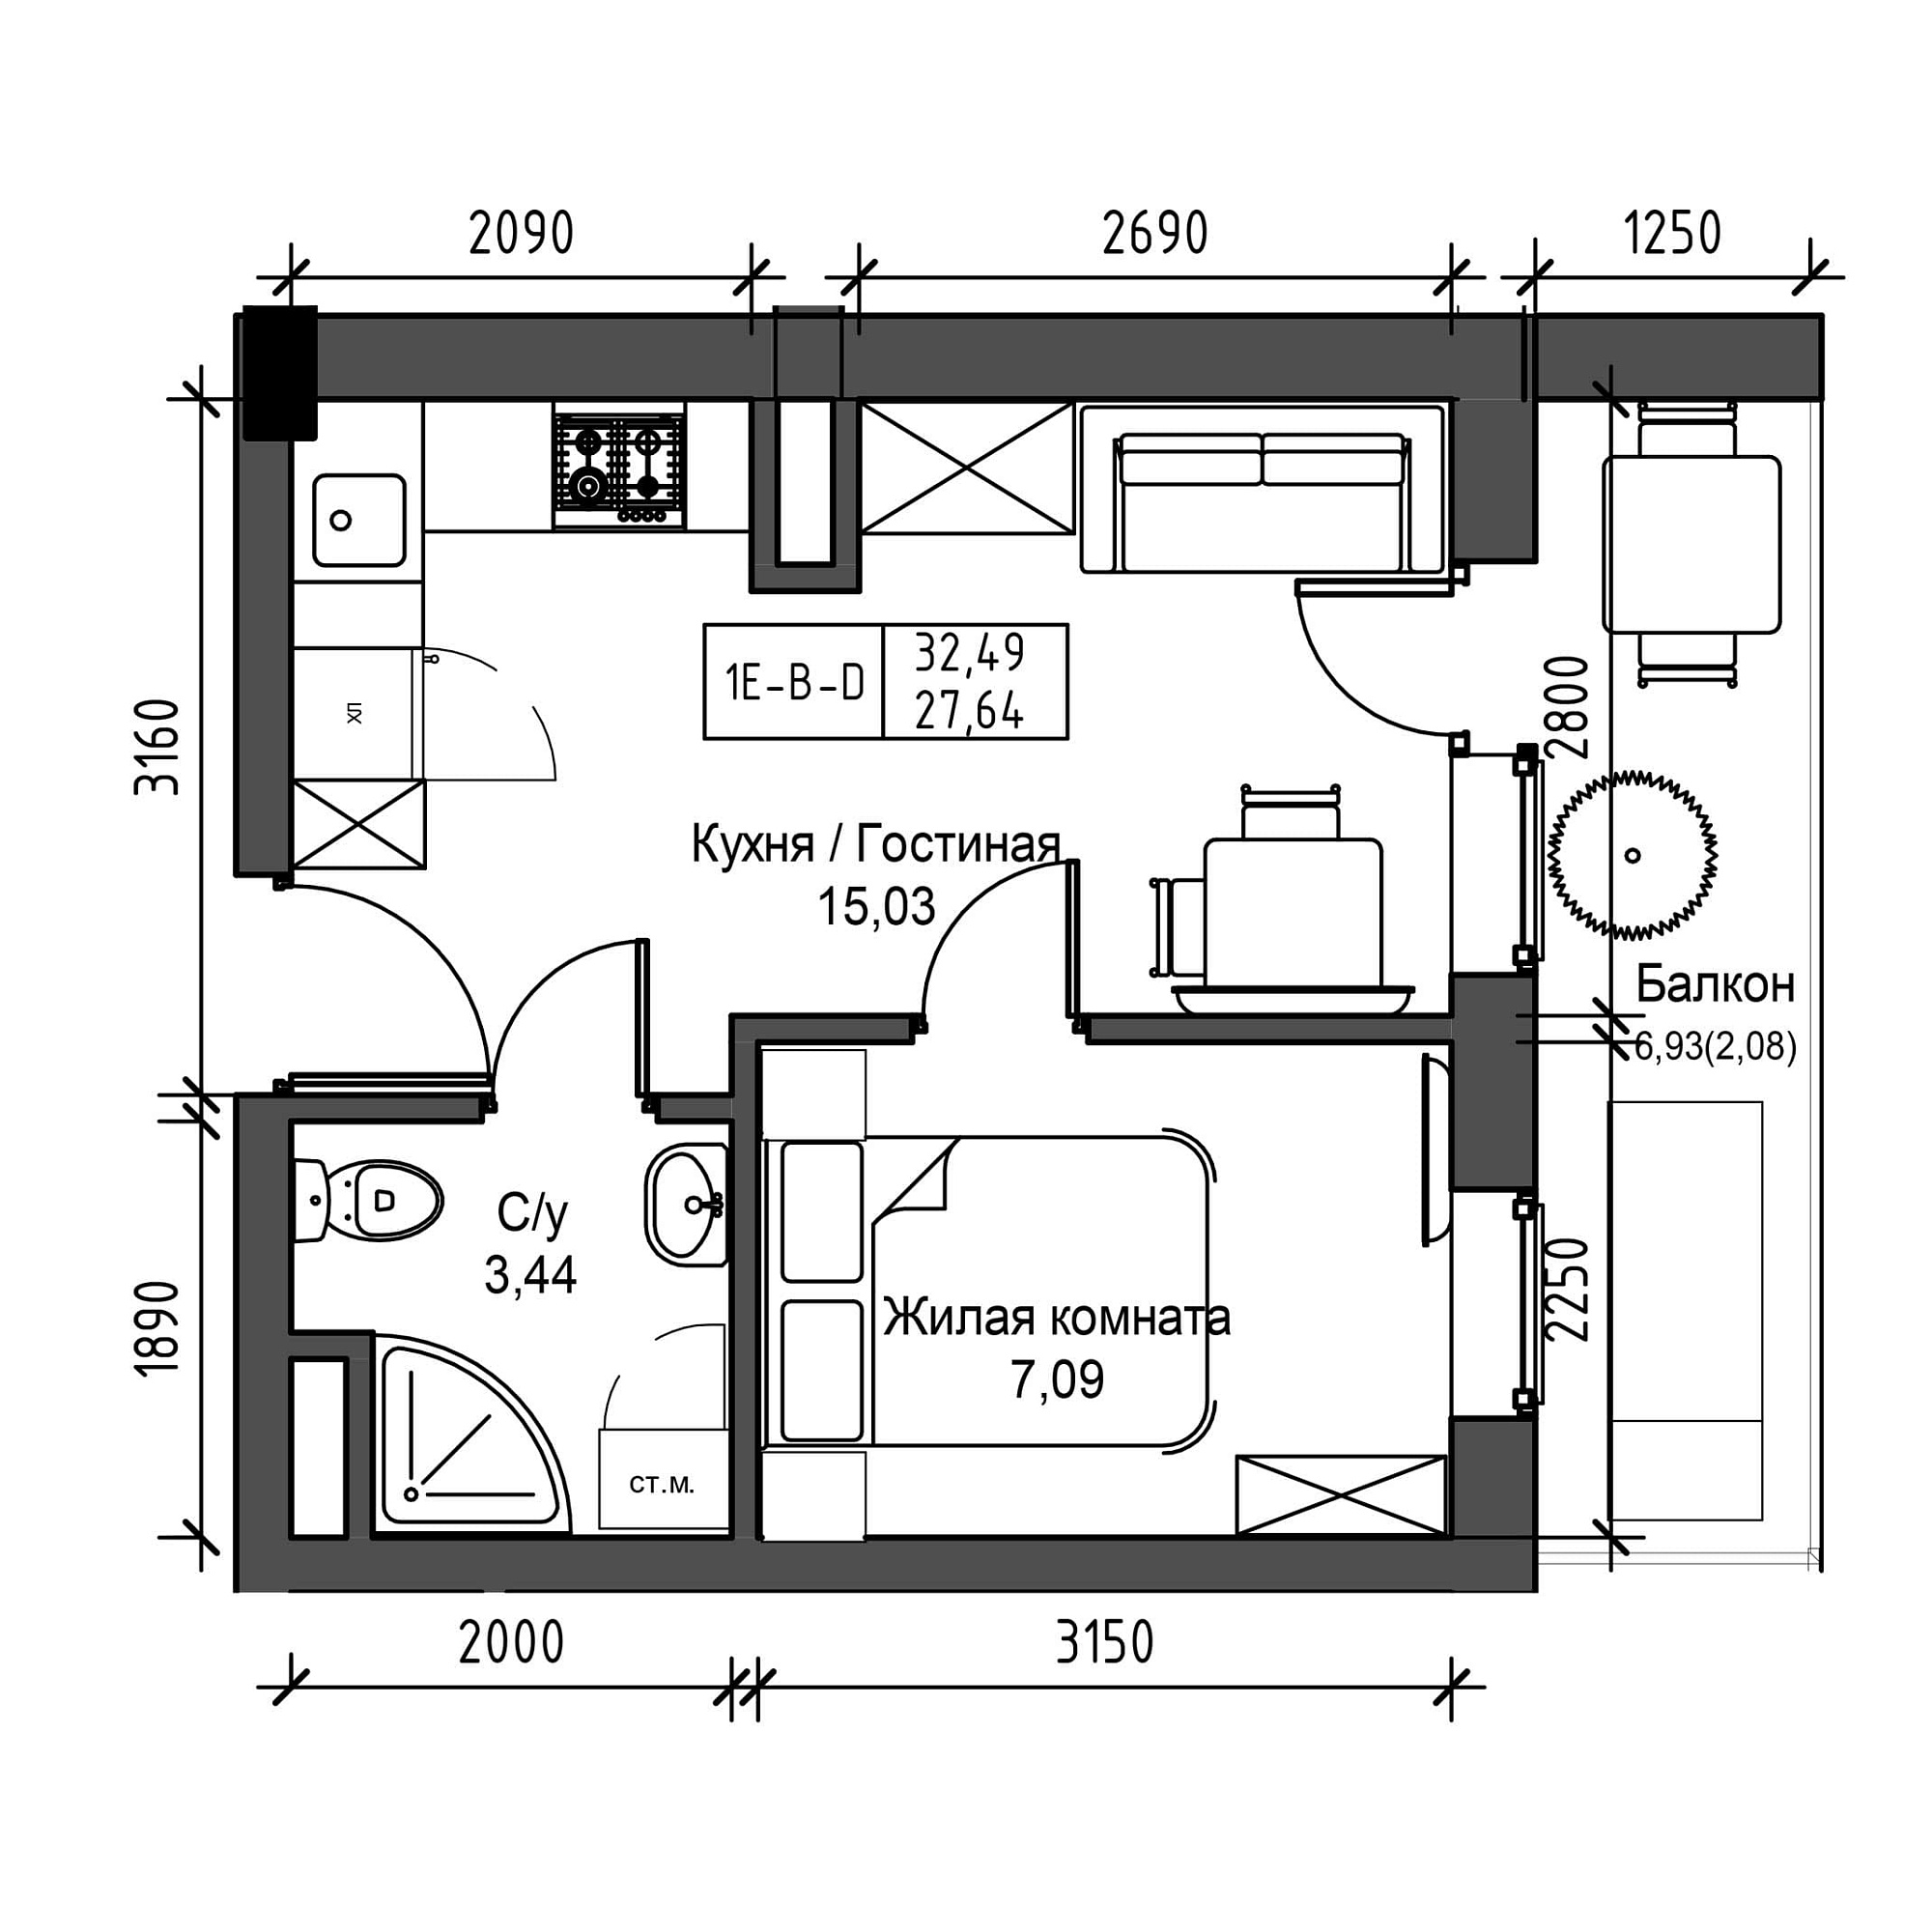 Планування 1-к квартира площею 27.64м2, UM-001-06/0001.